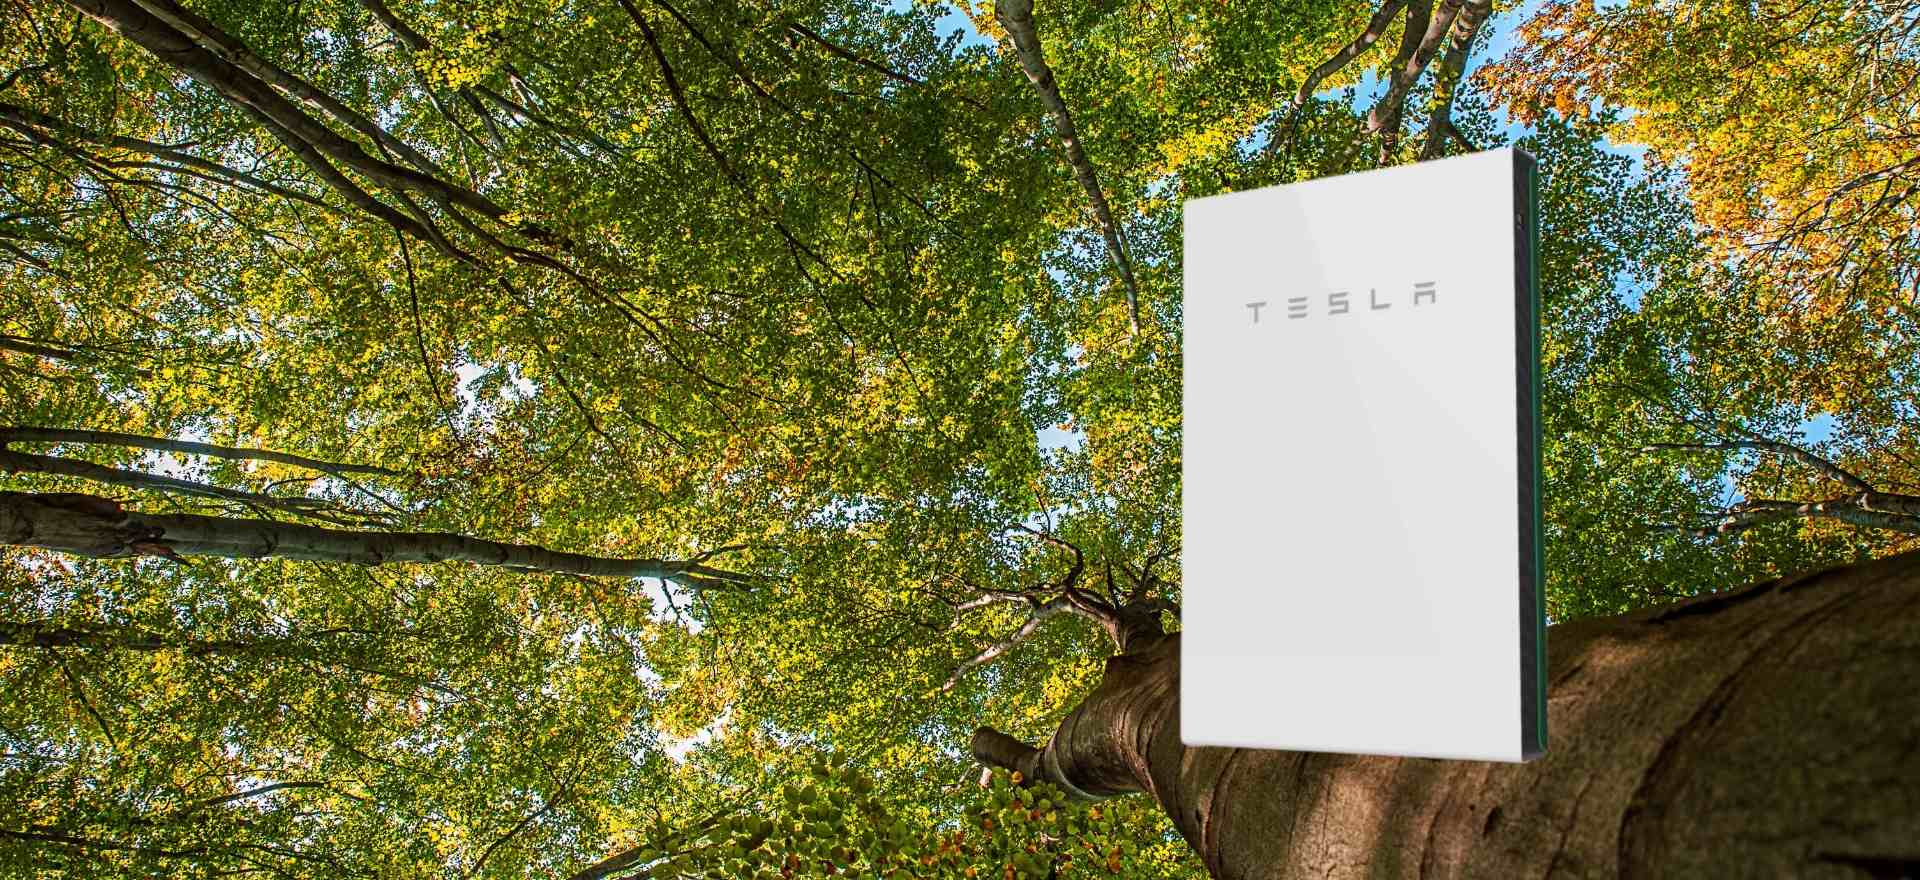 Batteria di accumulo fotovoltaico Tesla Powerwall 2 su sfondo bosco di quercia